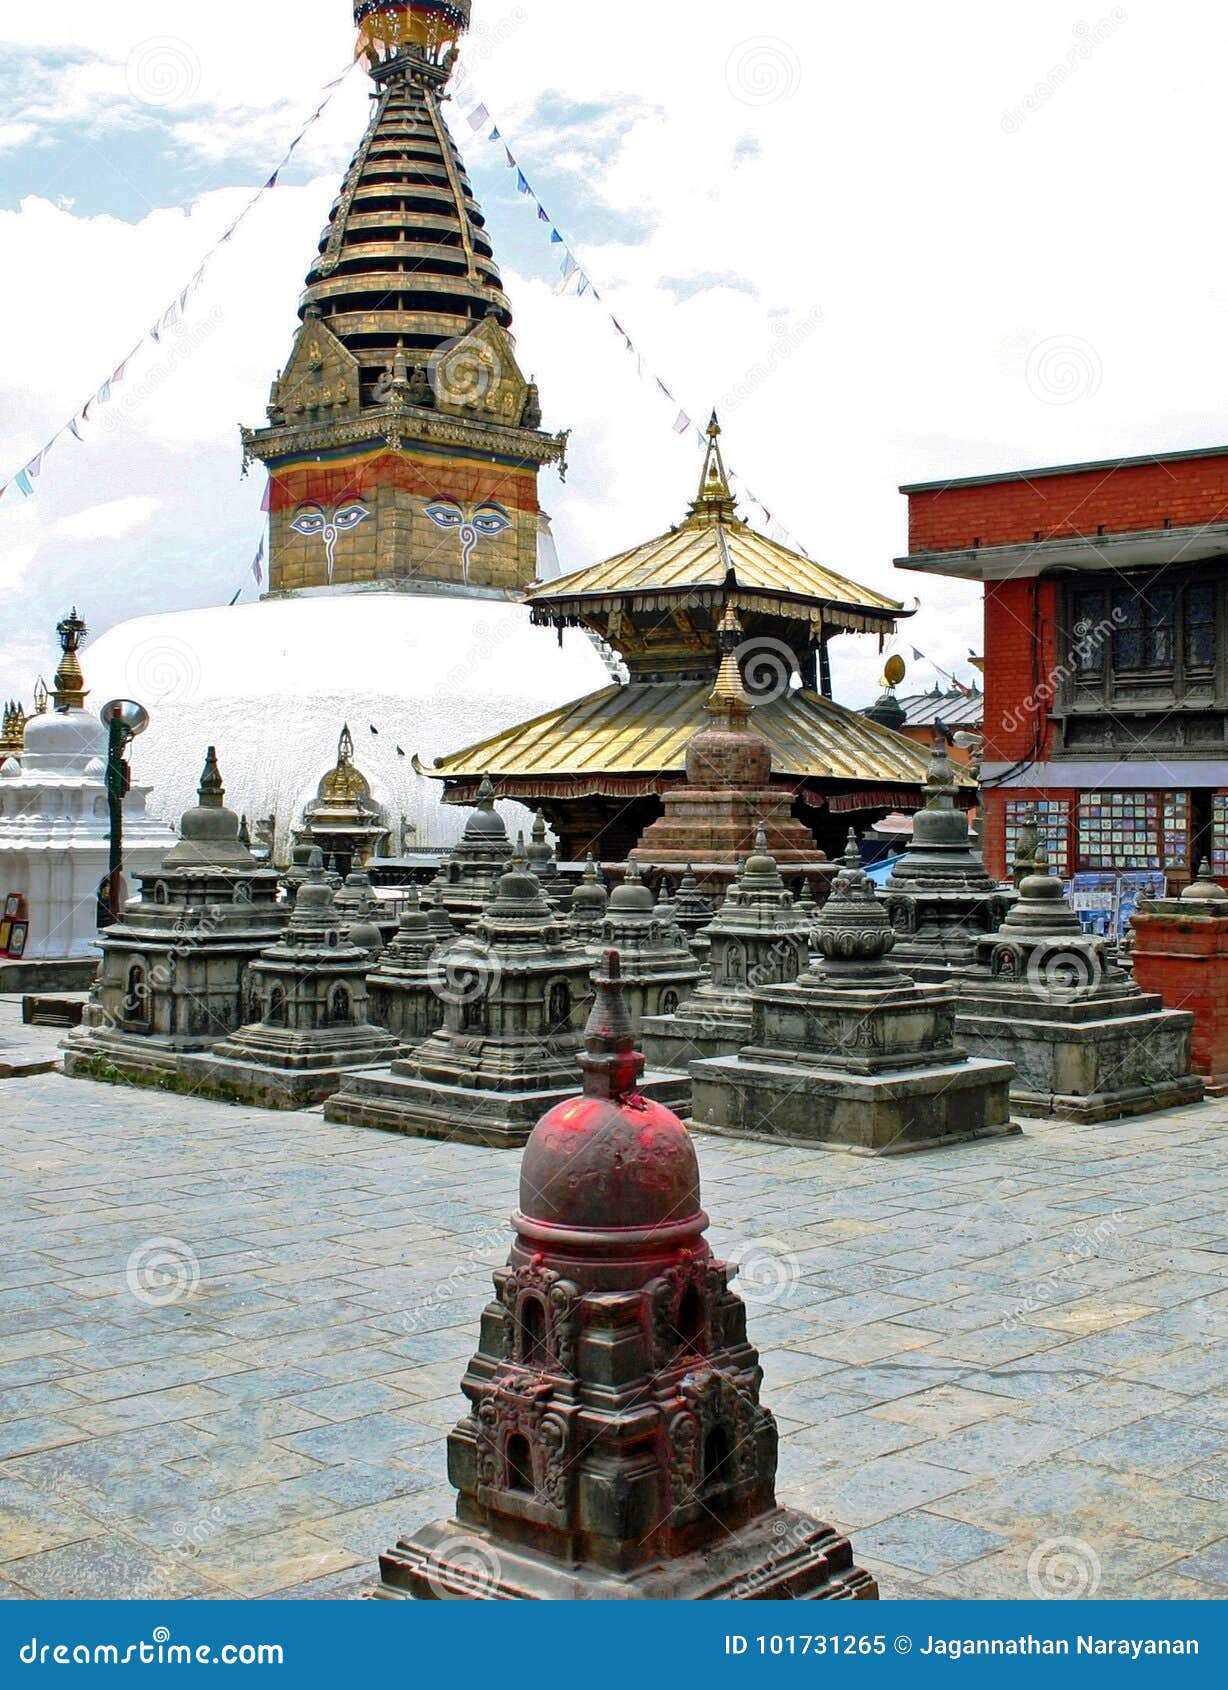 dating in kathmandu nepal